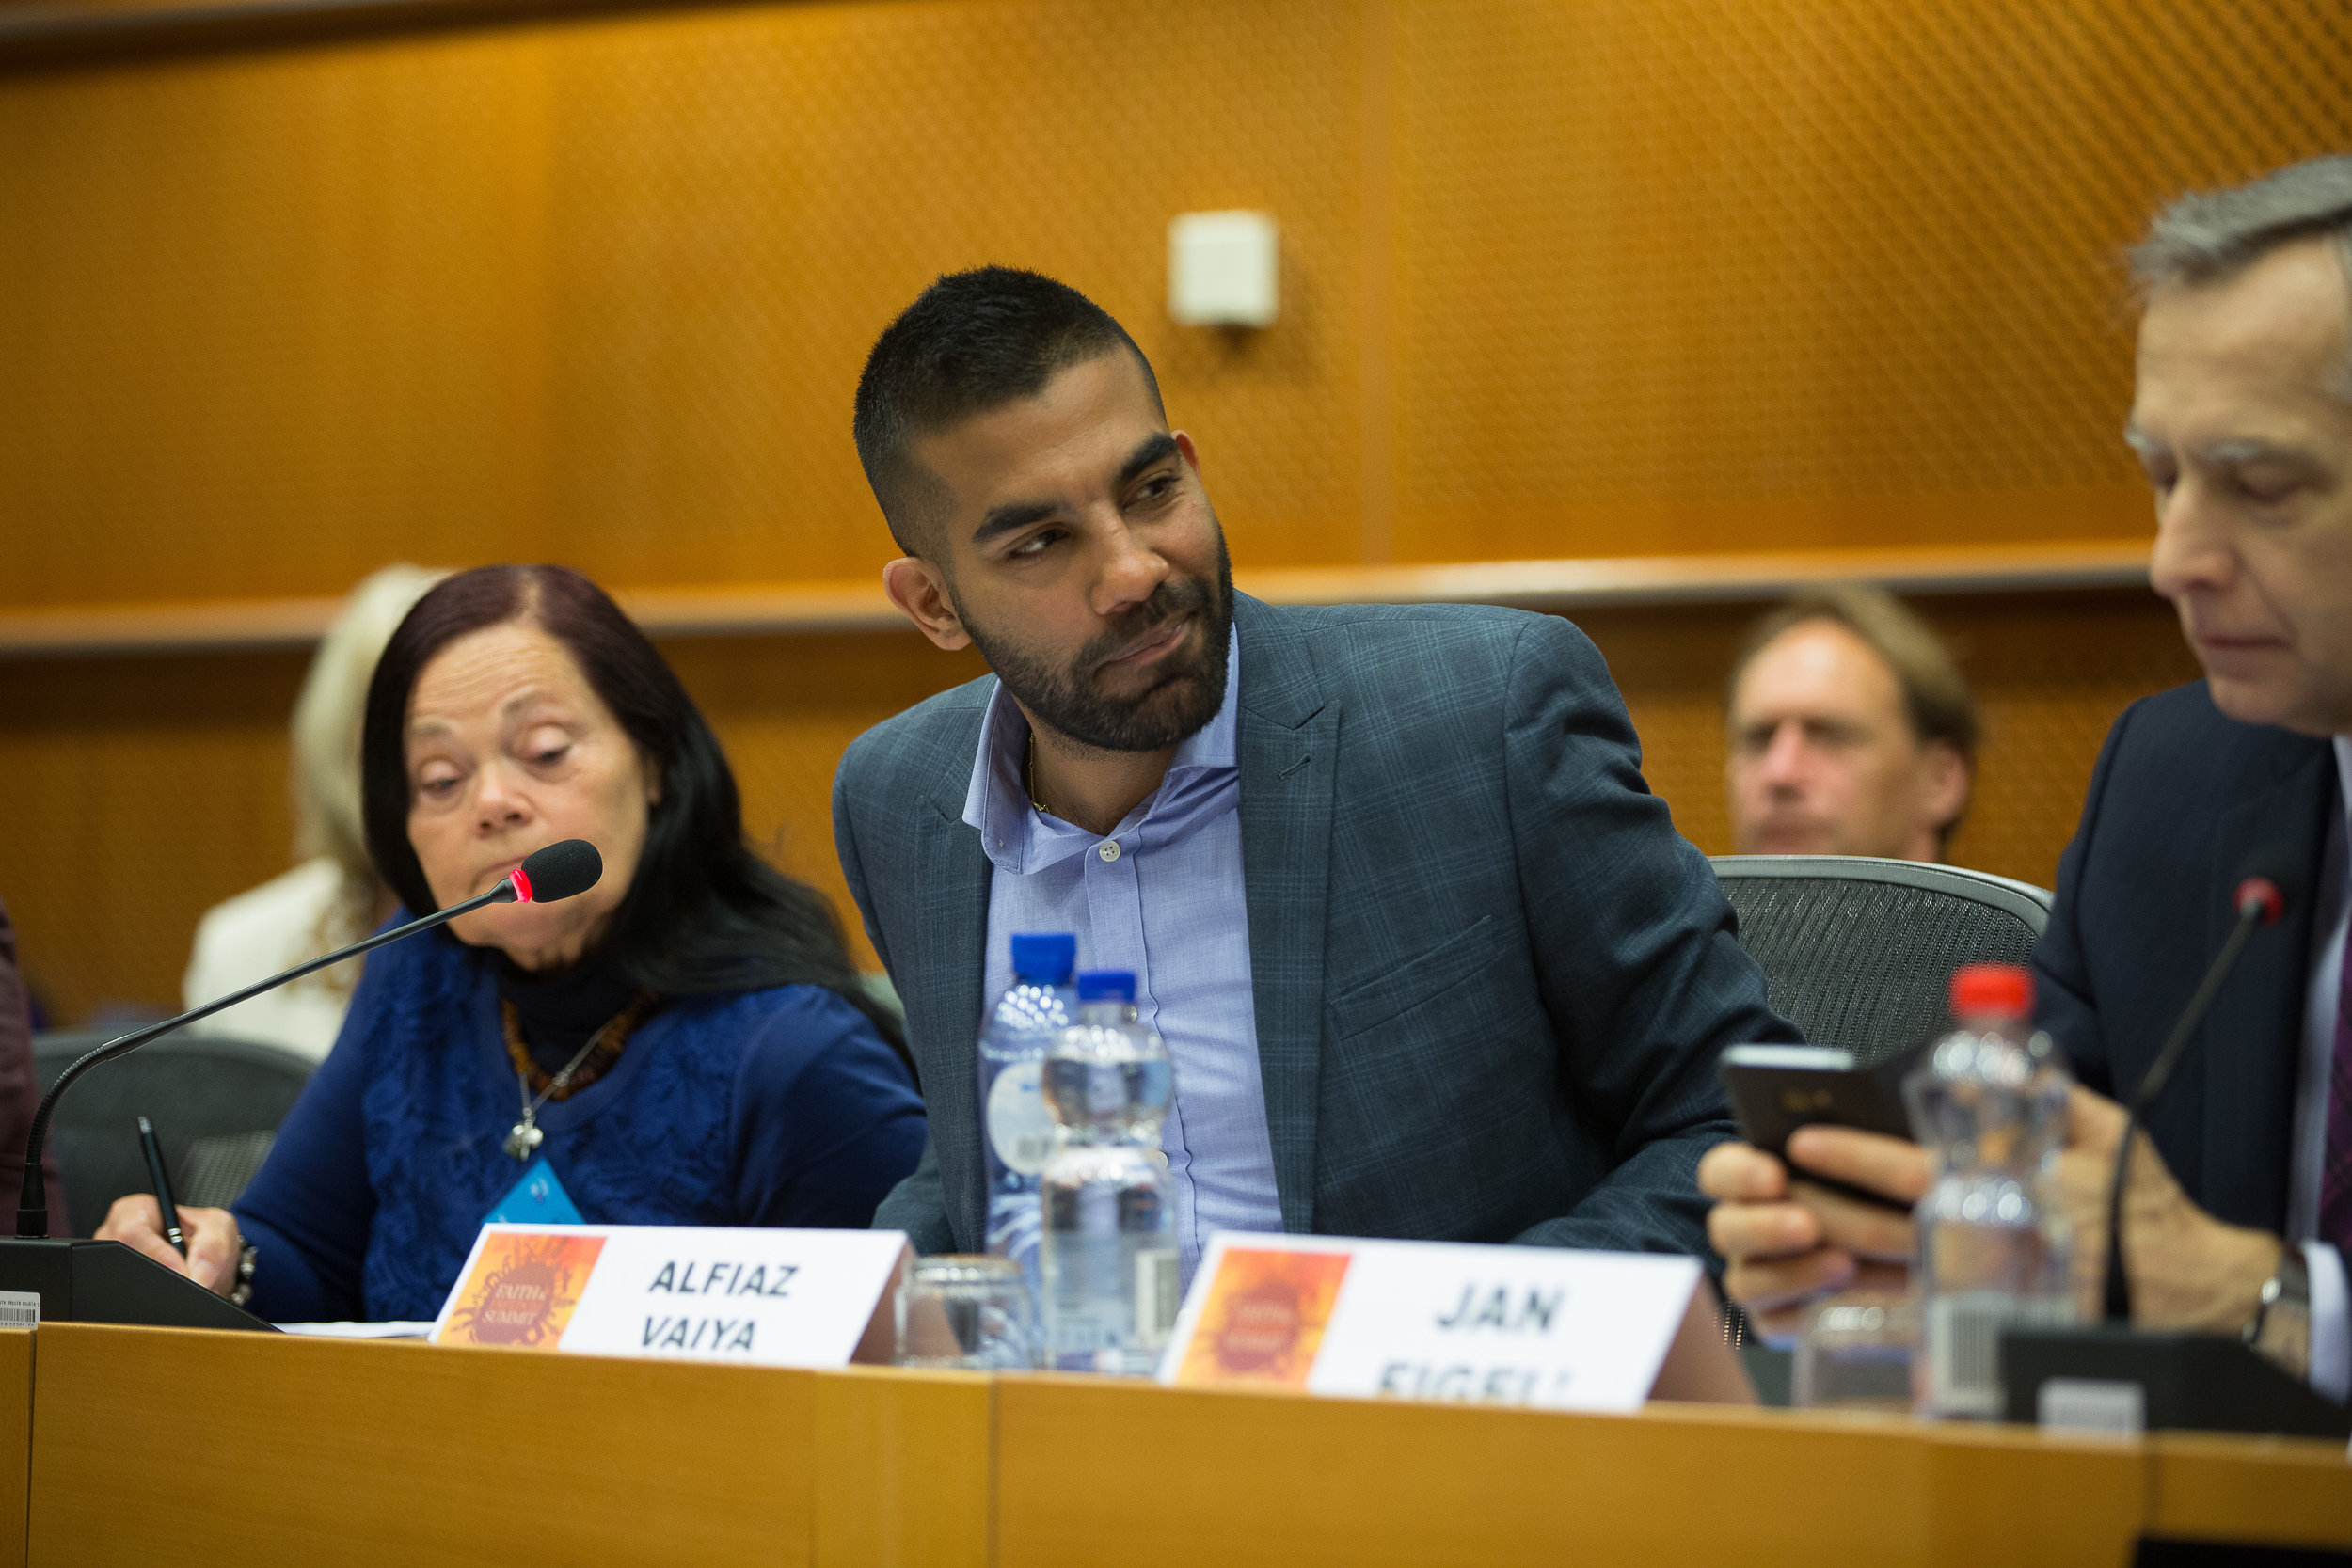 Alfiaz Vaiya -  Coordinator - European Parliament Anti-Racism and Diversity Intergroup